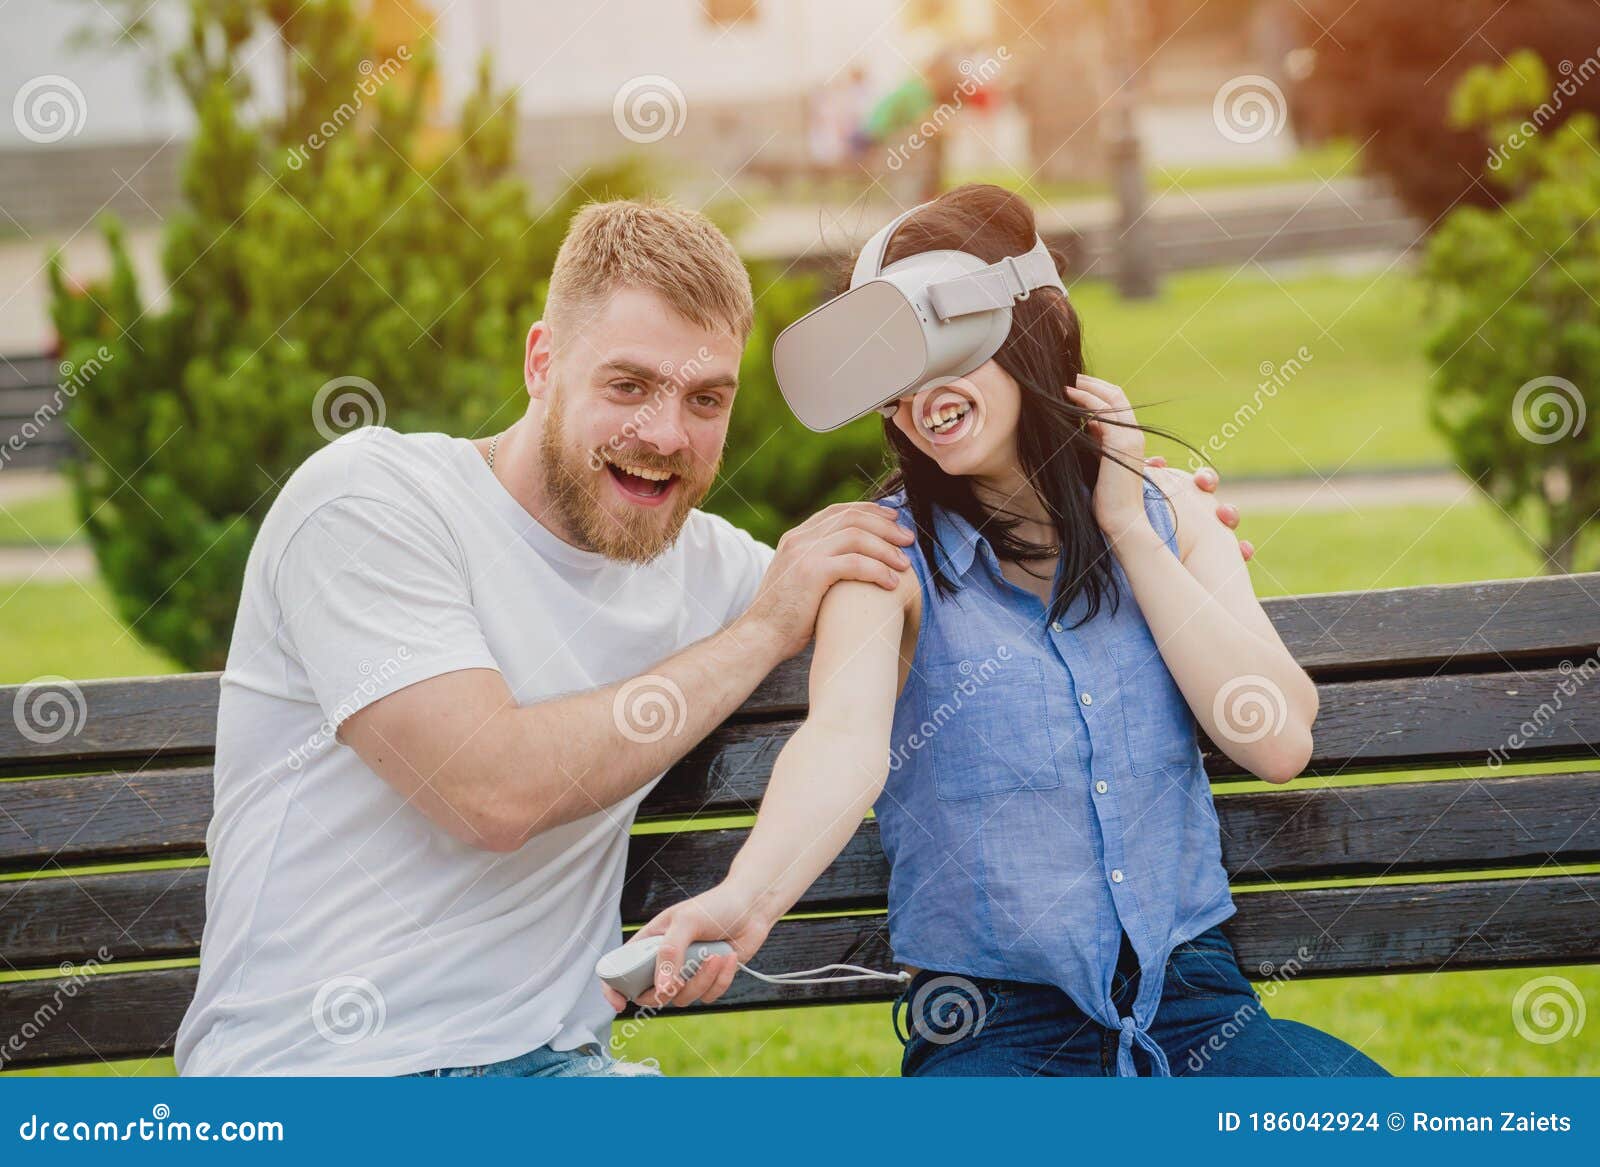 Virtual reality dating games